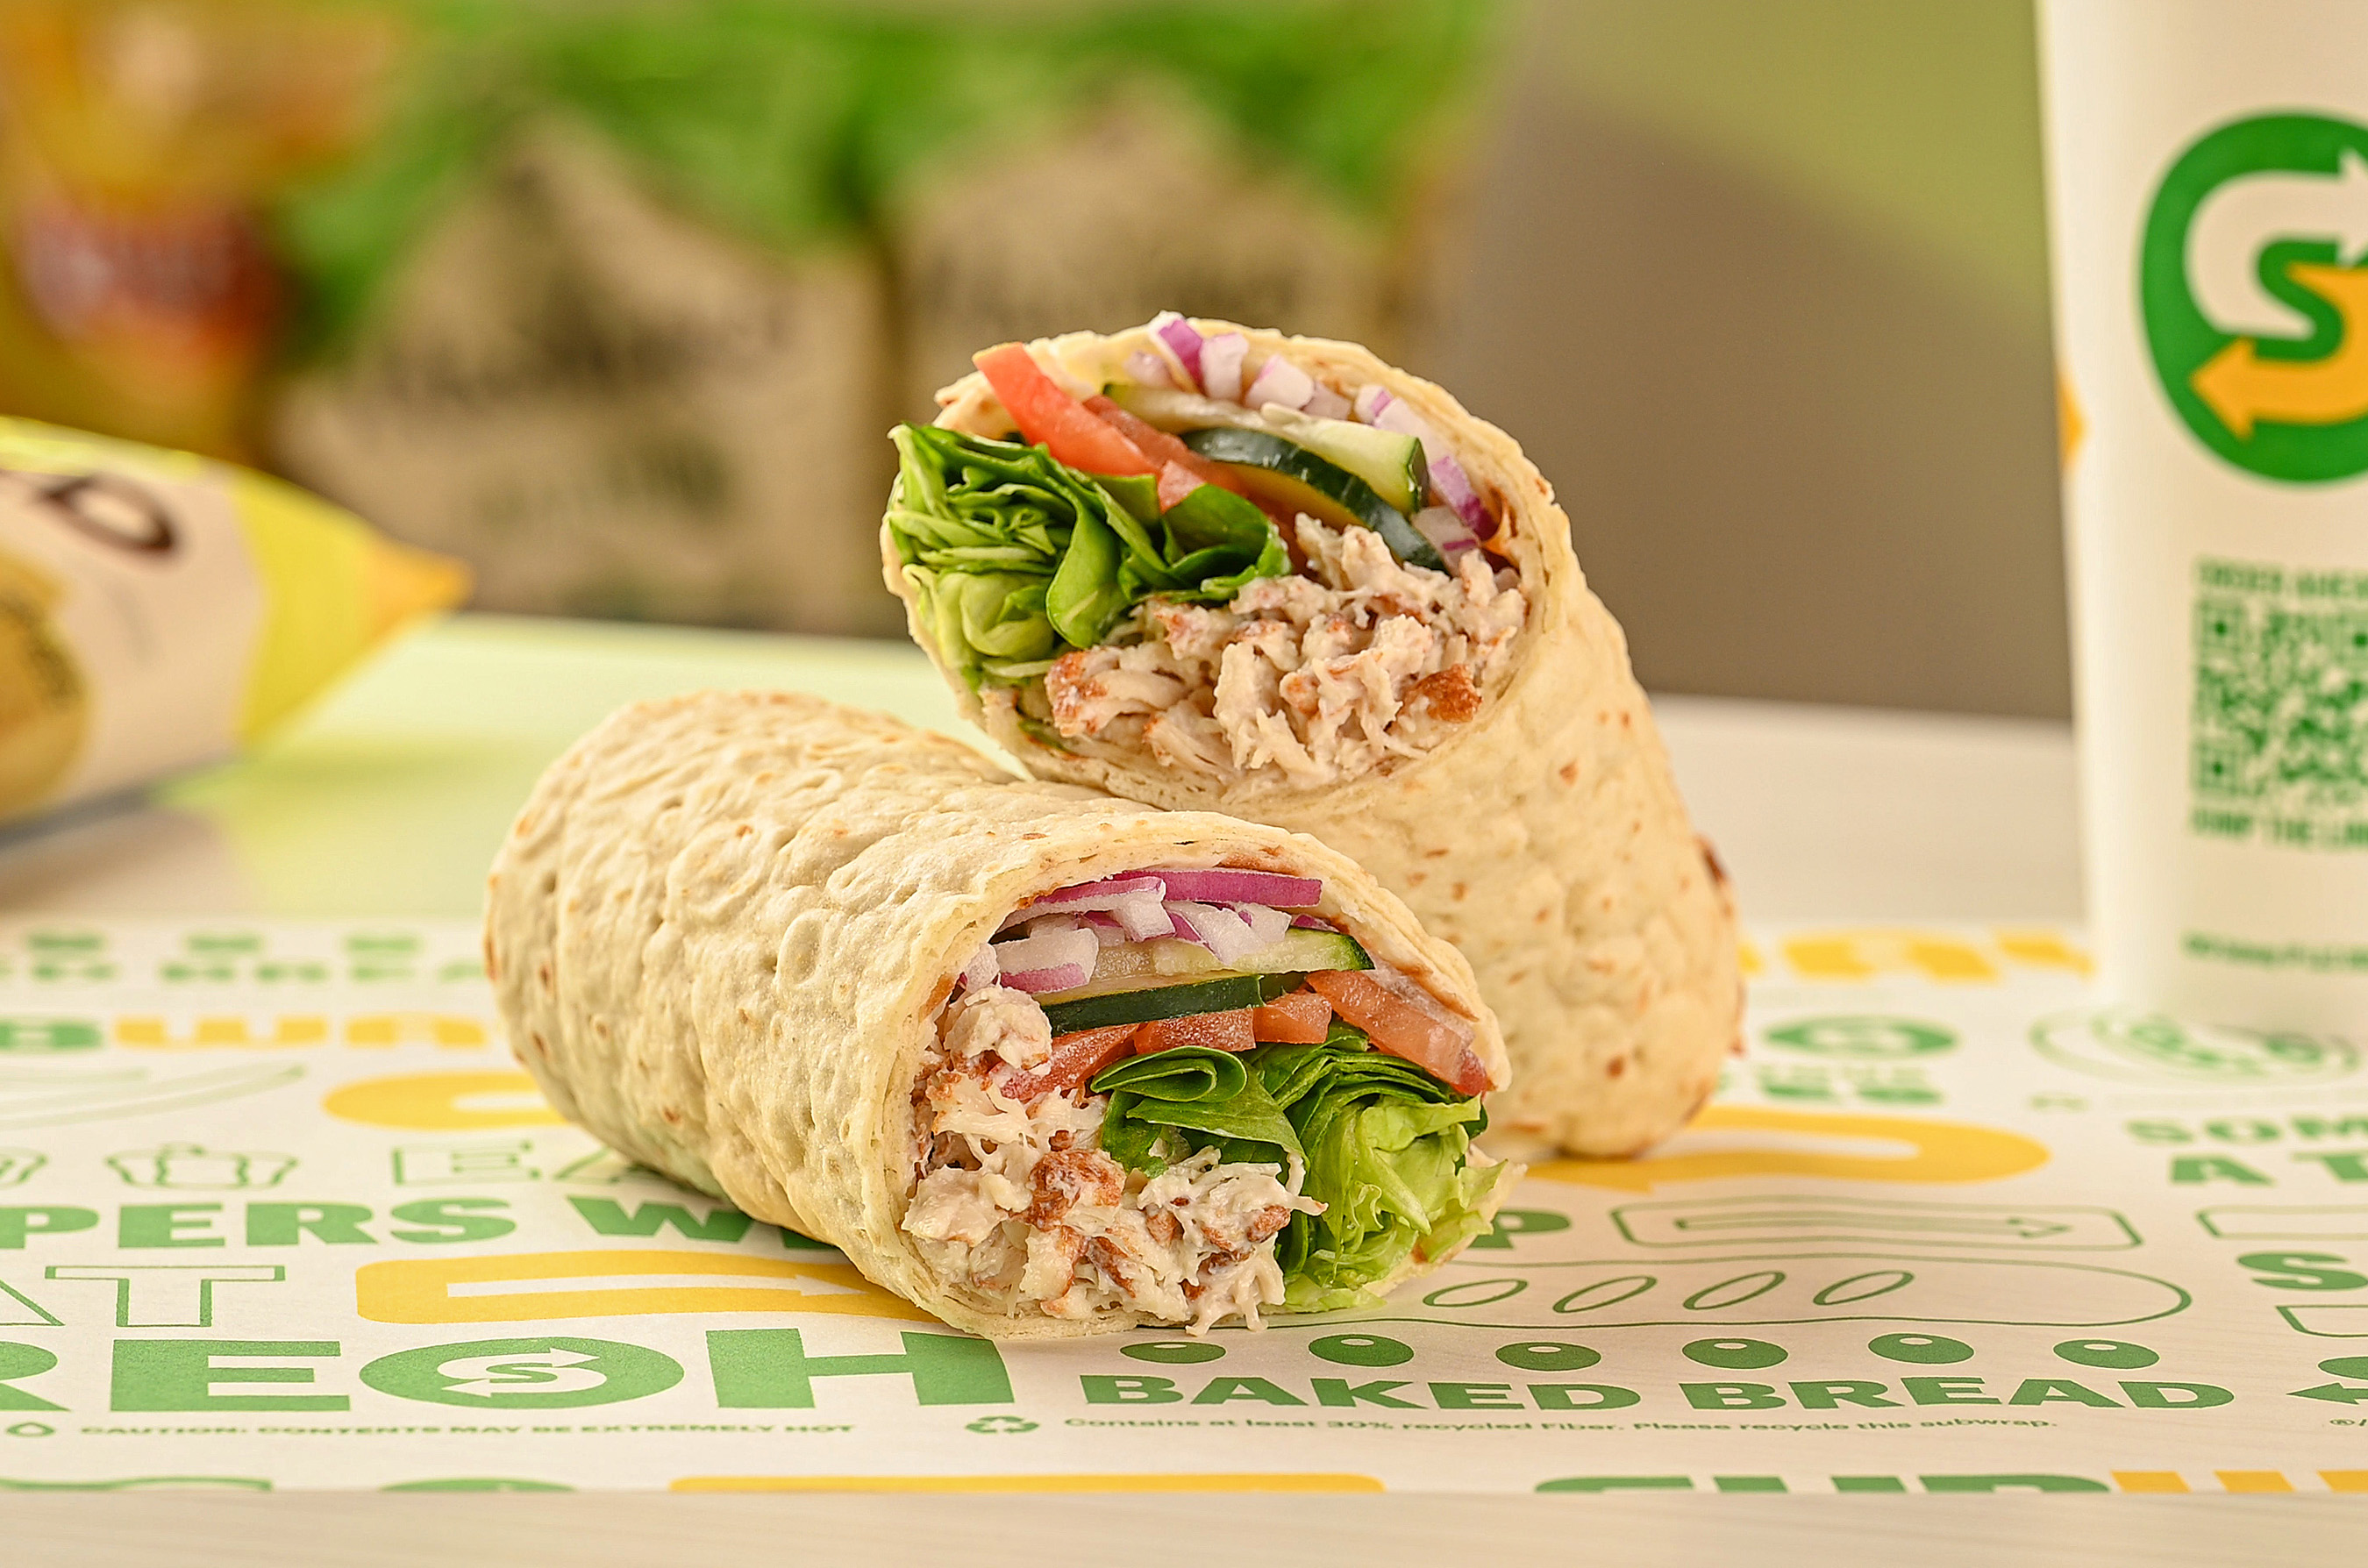 Subway’s Homestyle Chicken Salad wrap
